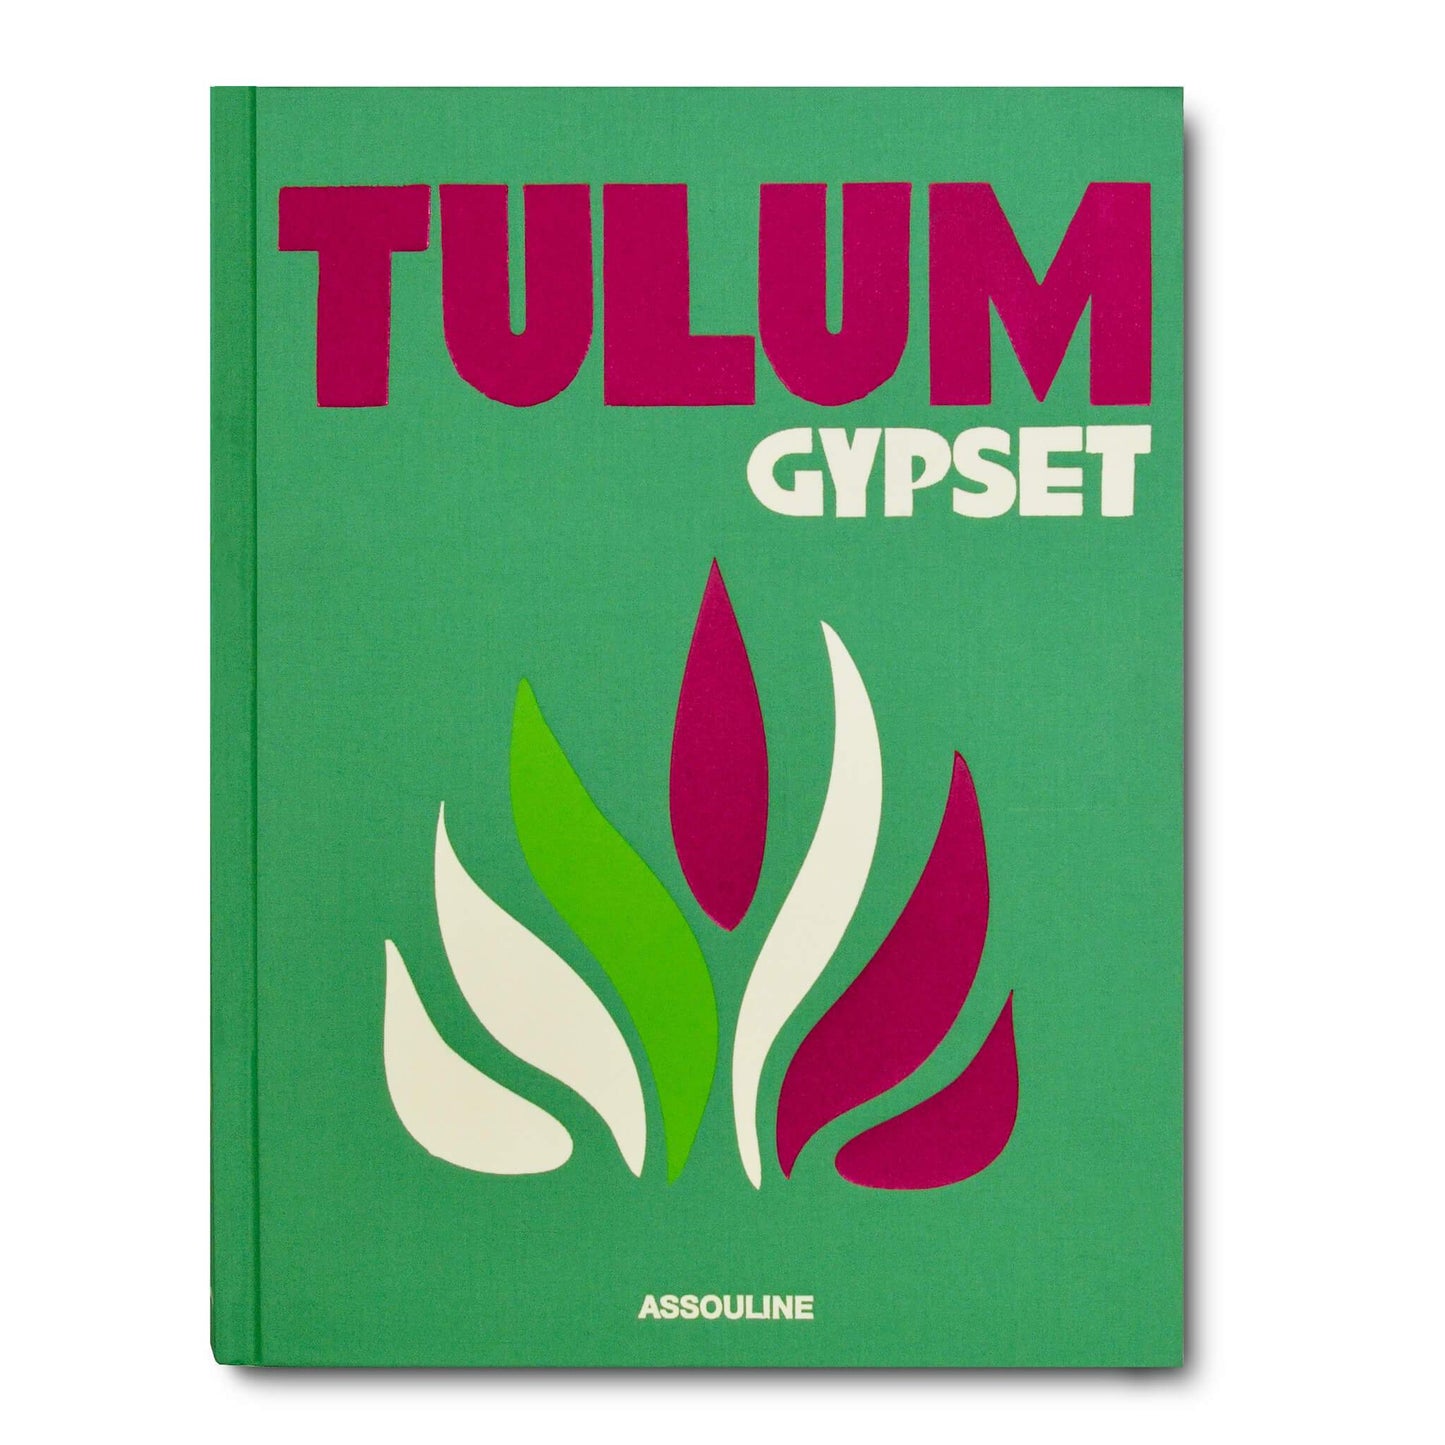 TULUM GYPSET BOOK - $105